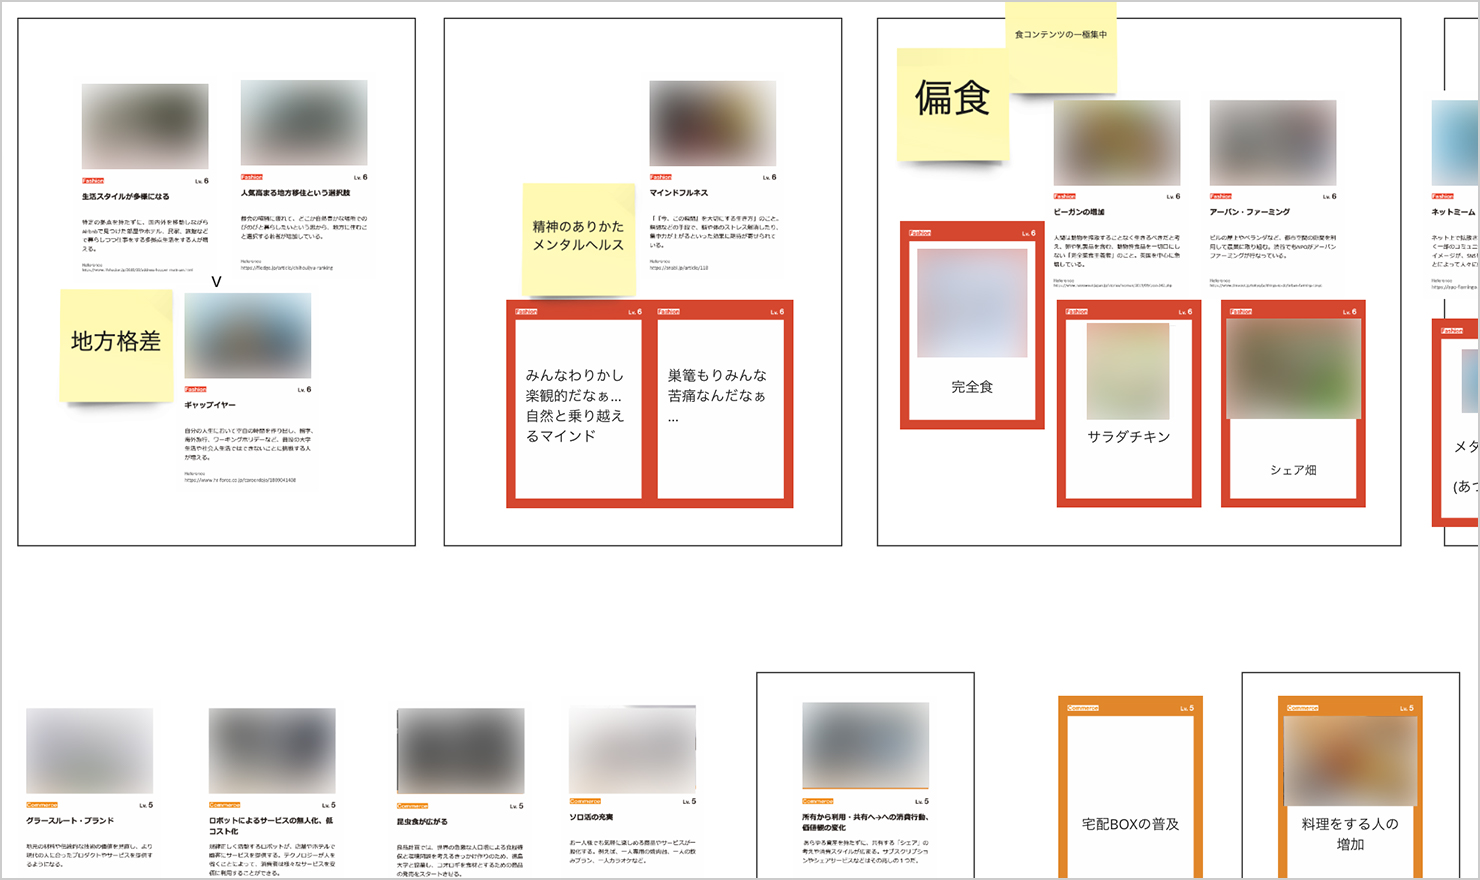 miro画面キャプチャ：新人研修のワークショップで実際に作られた画像。地方格差、偏食などのキーワードが並ぶ